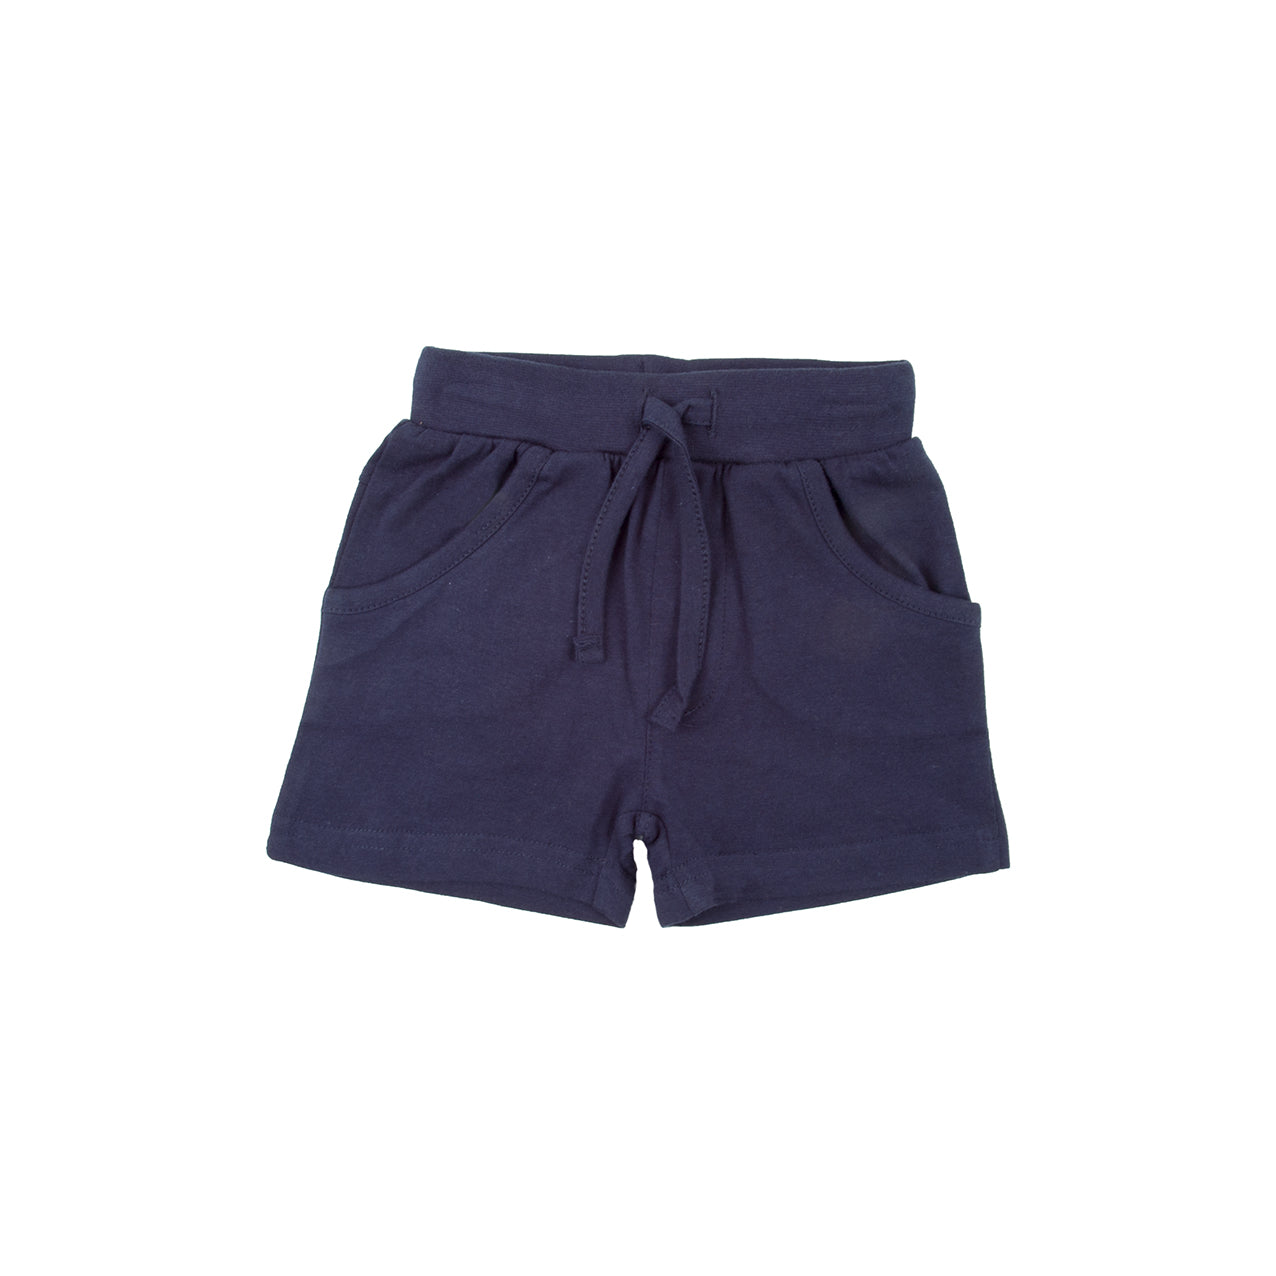 Navy blue cotton shorts